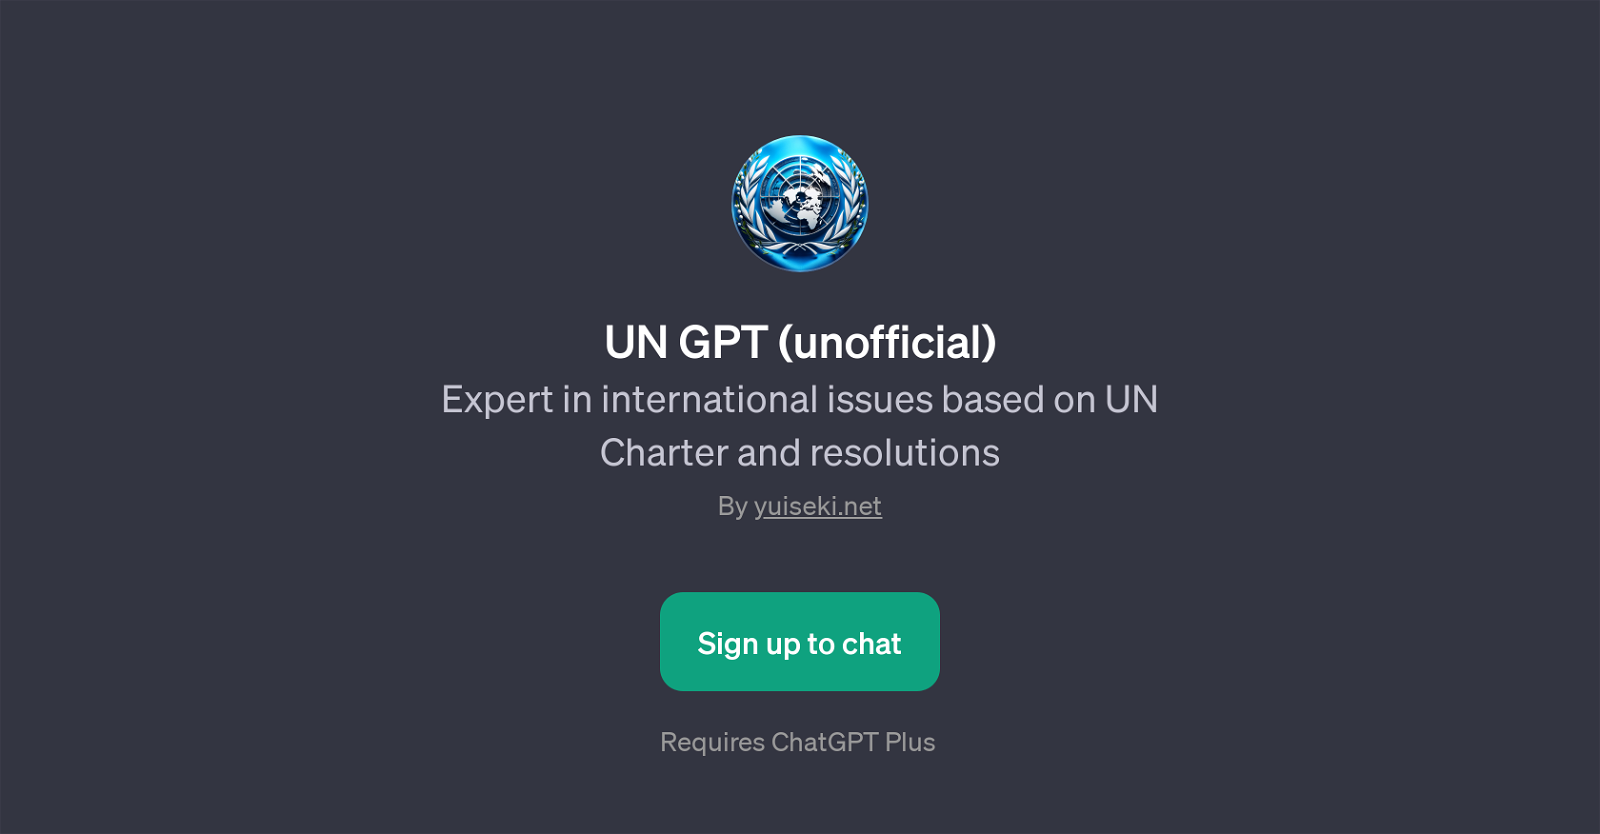 UN GPT (unofficial) website